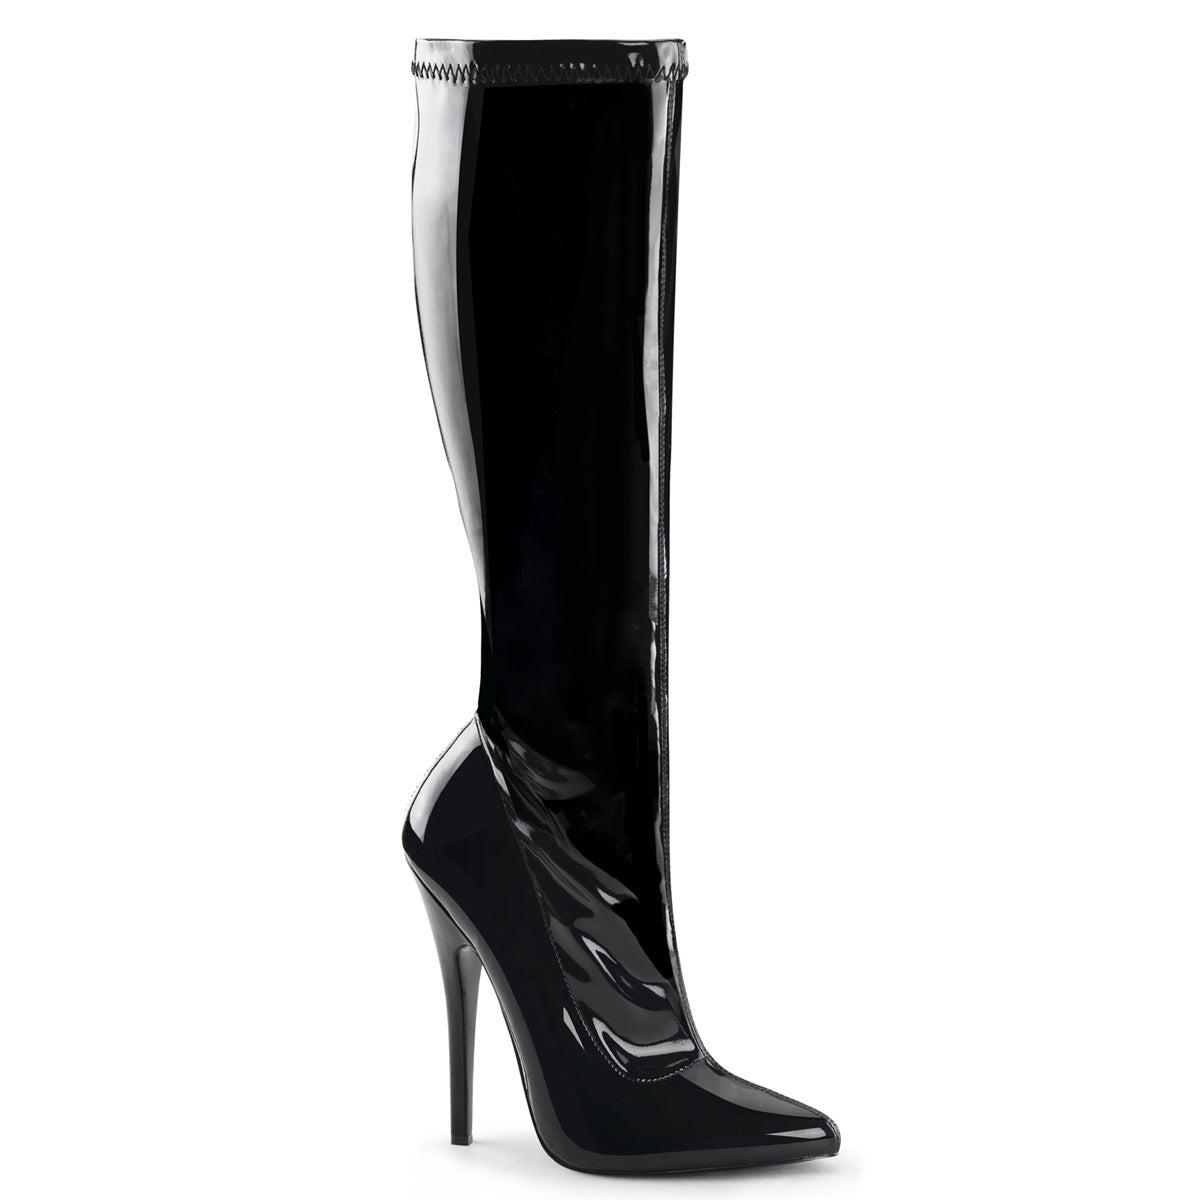 DOMINA-2000 Patent Black Stiletto Knee High Boots